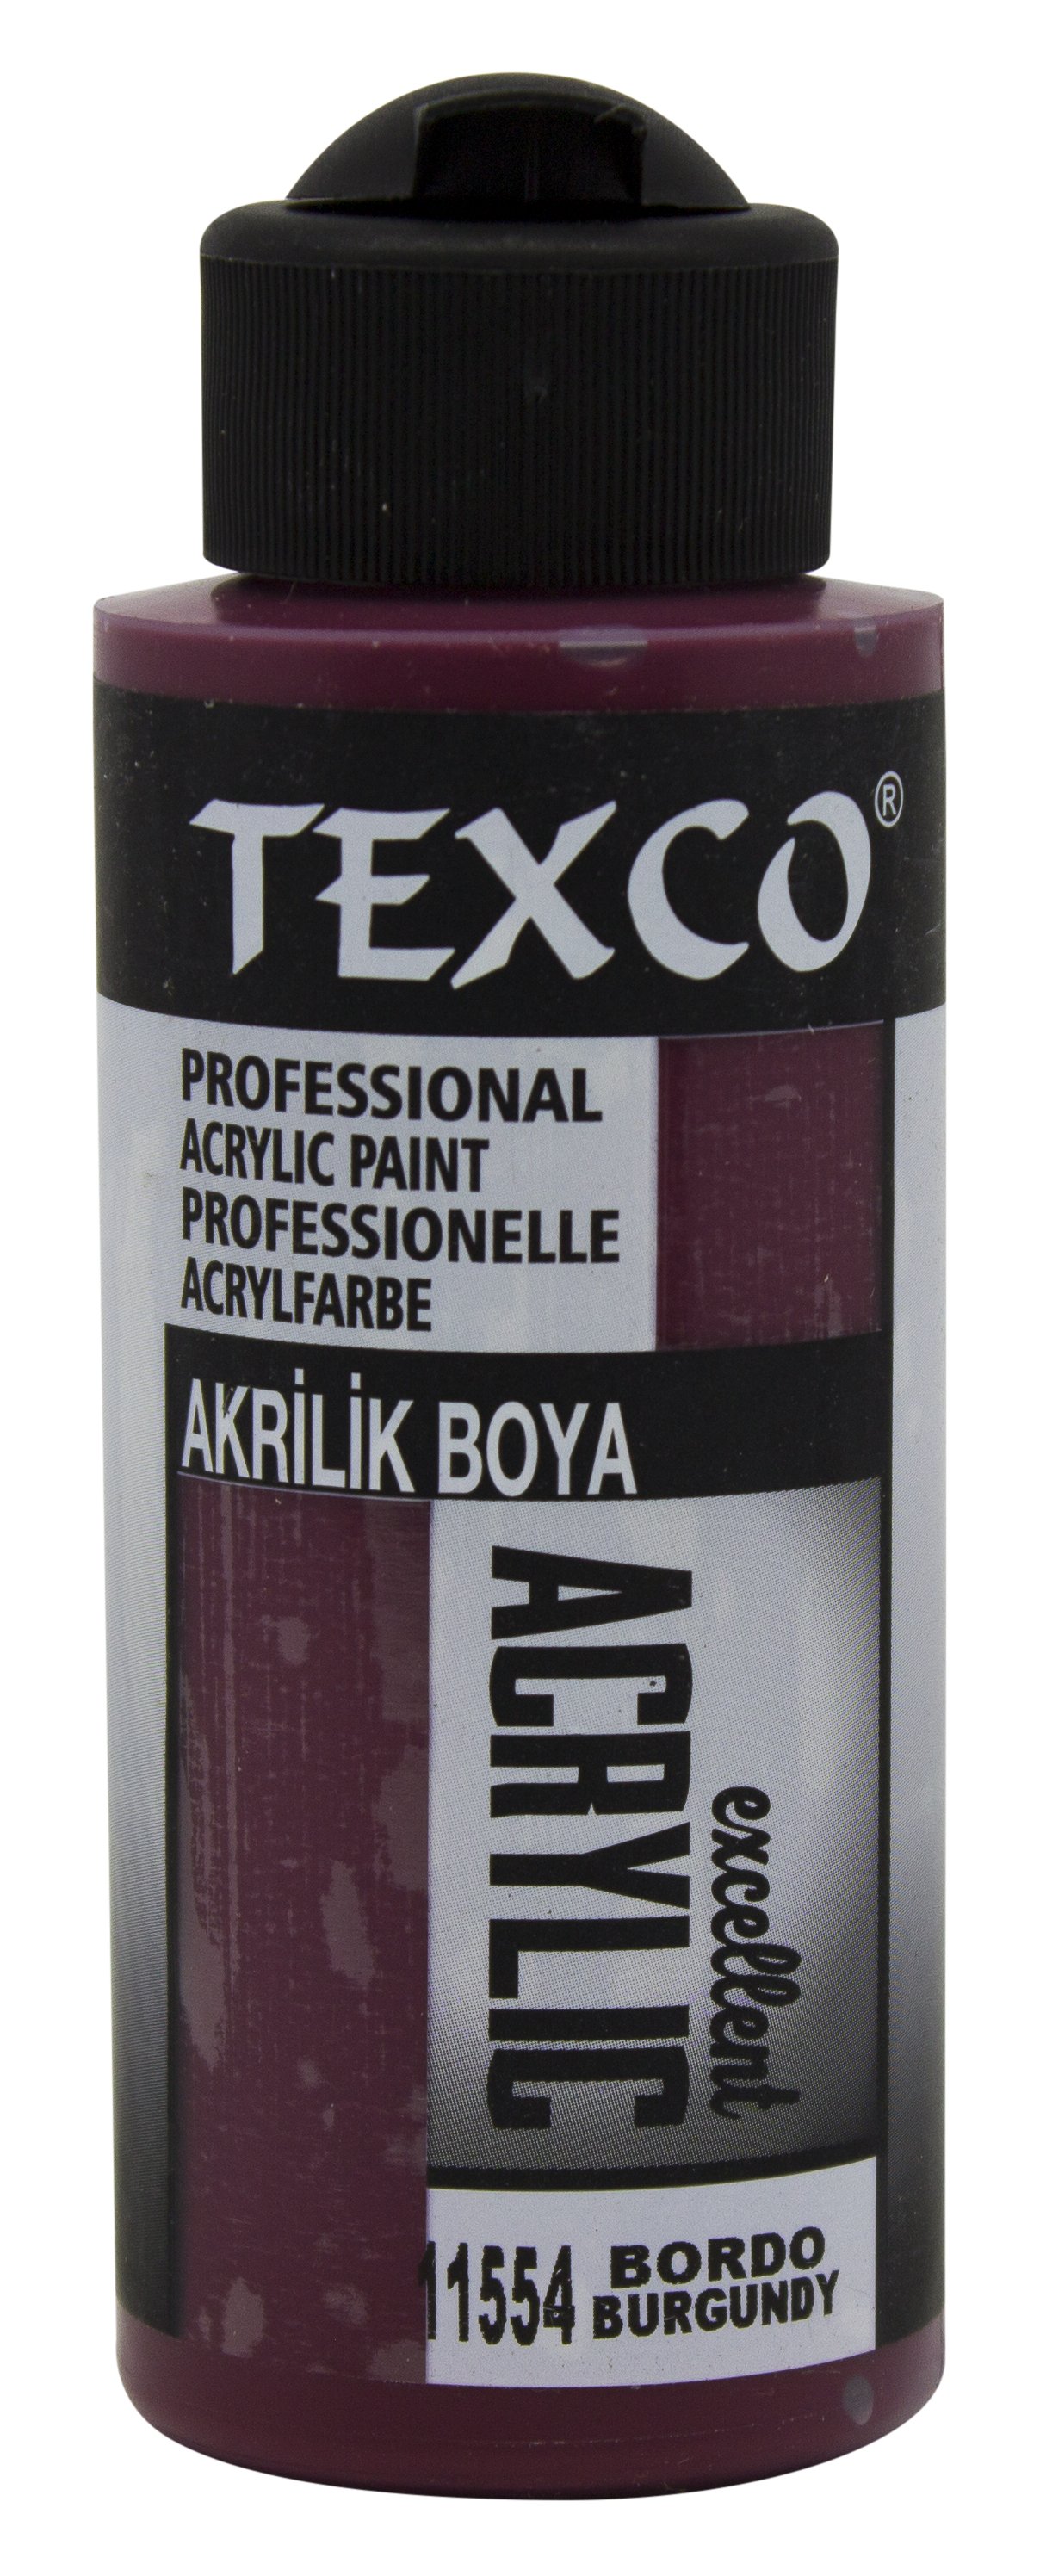 Texco Excellent Akrilik Boya 11554-Bordo 110 cc